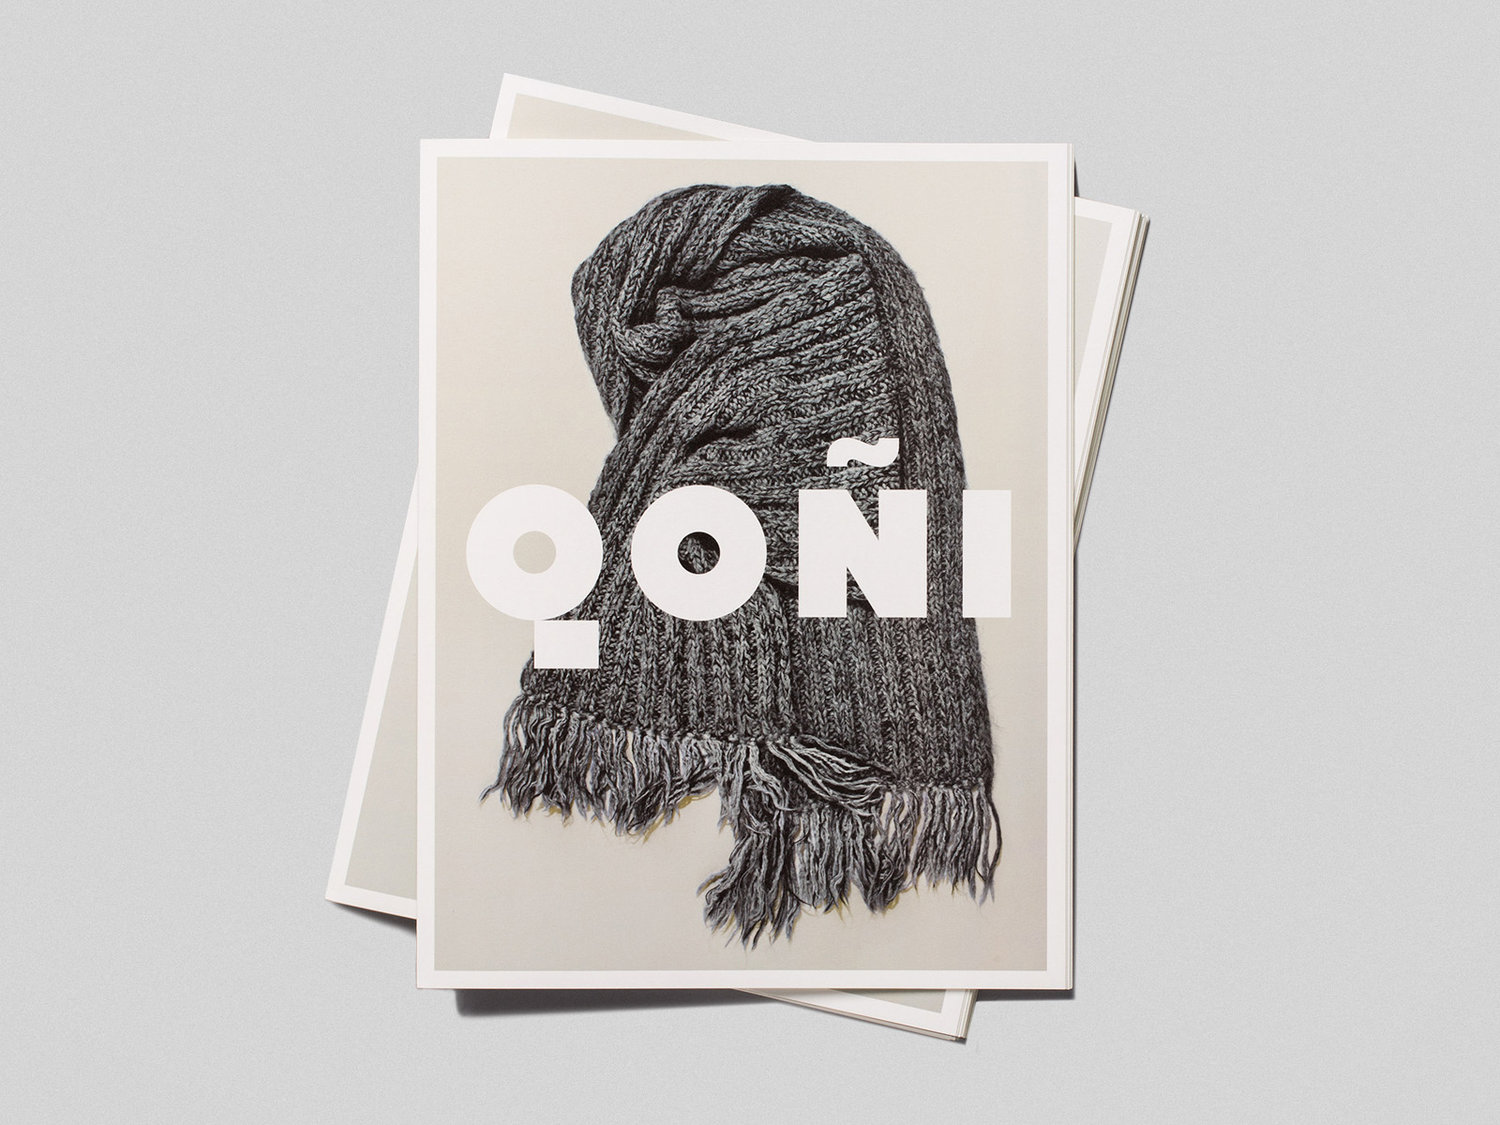 Brand identity and lookbook by Toronto-based Leo Burnett Design for Peruvian handmade knitwear brand Qoñi